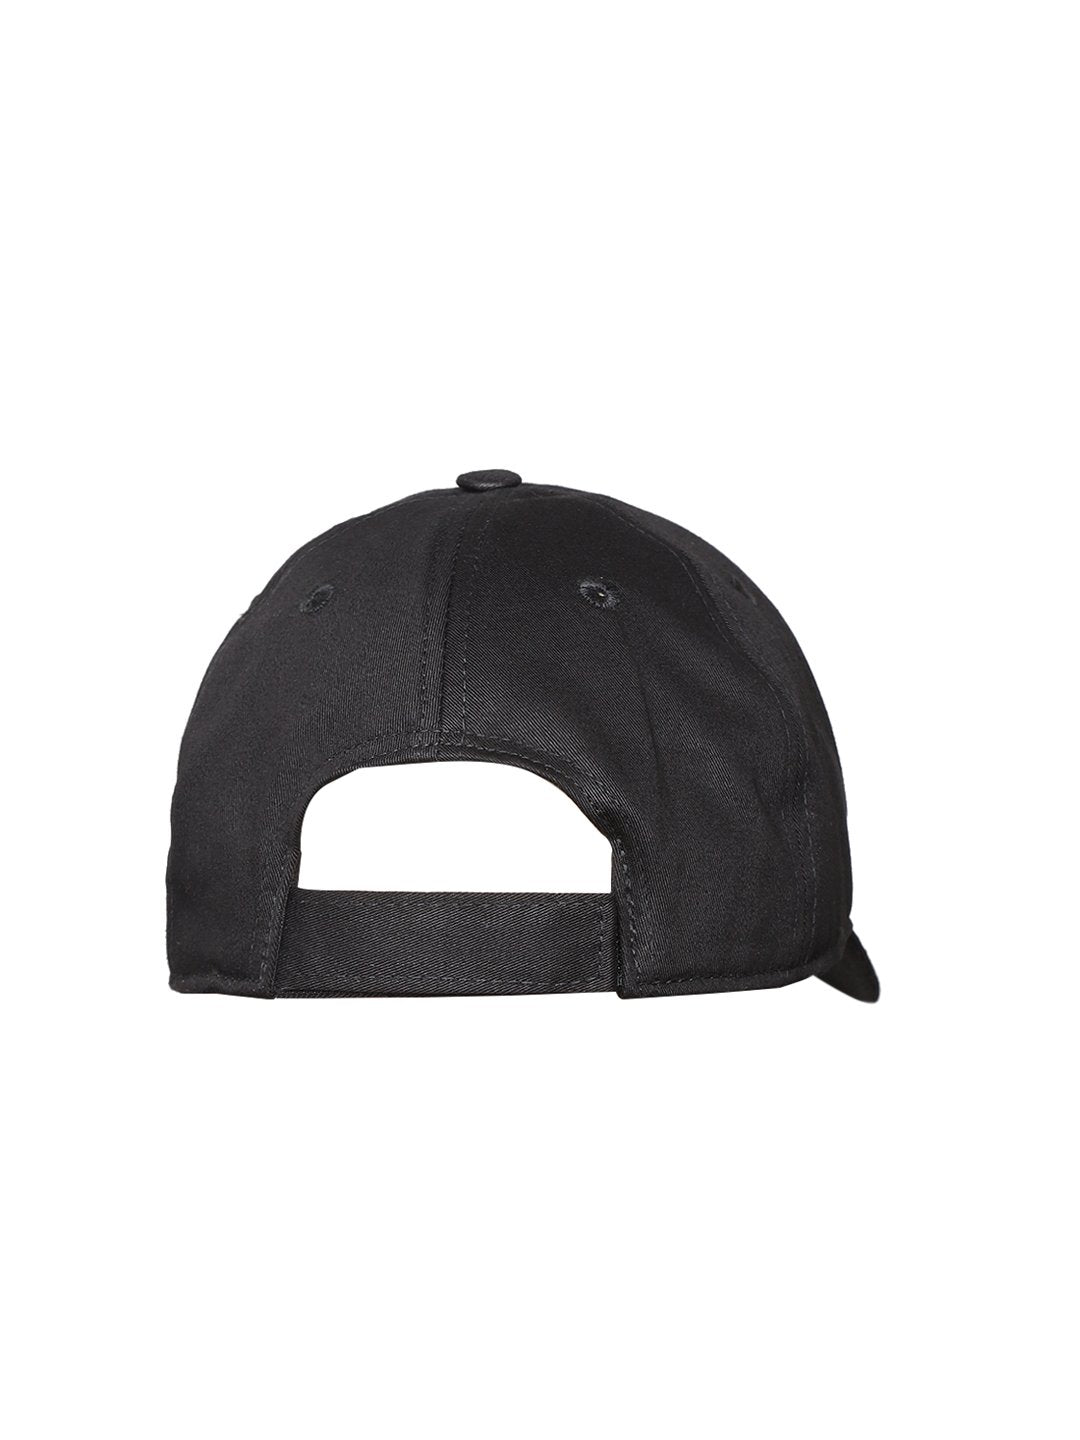 Blueberry black color snapback cap